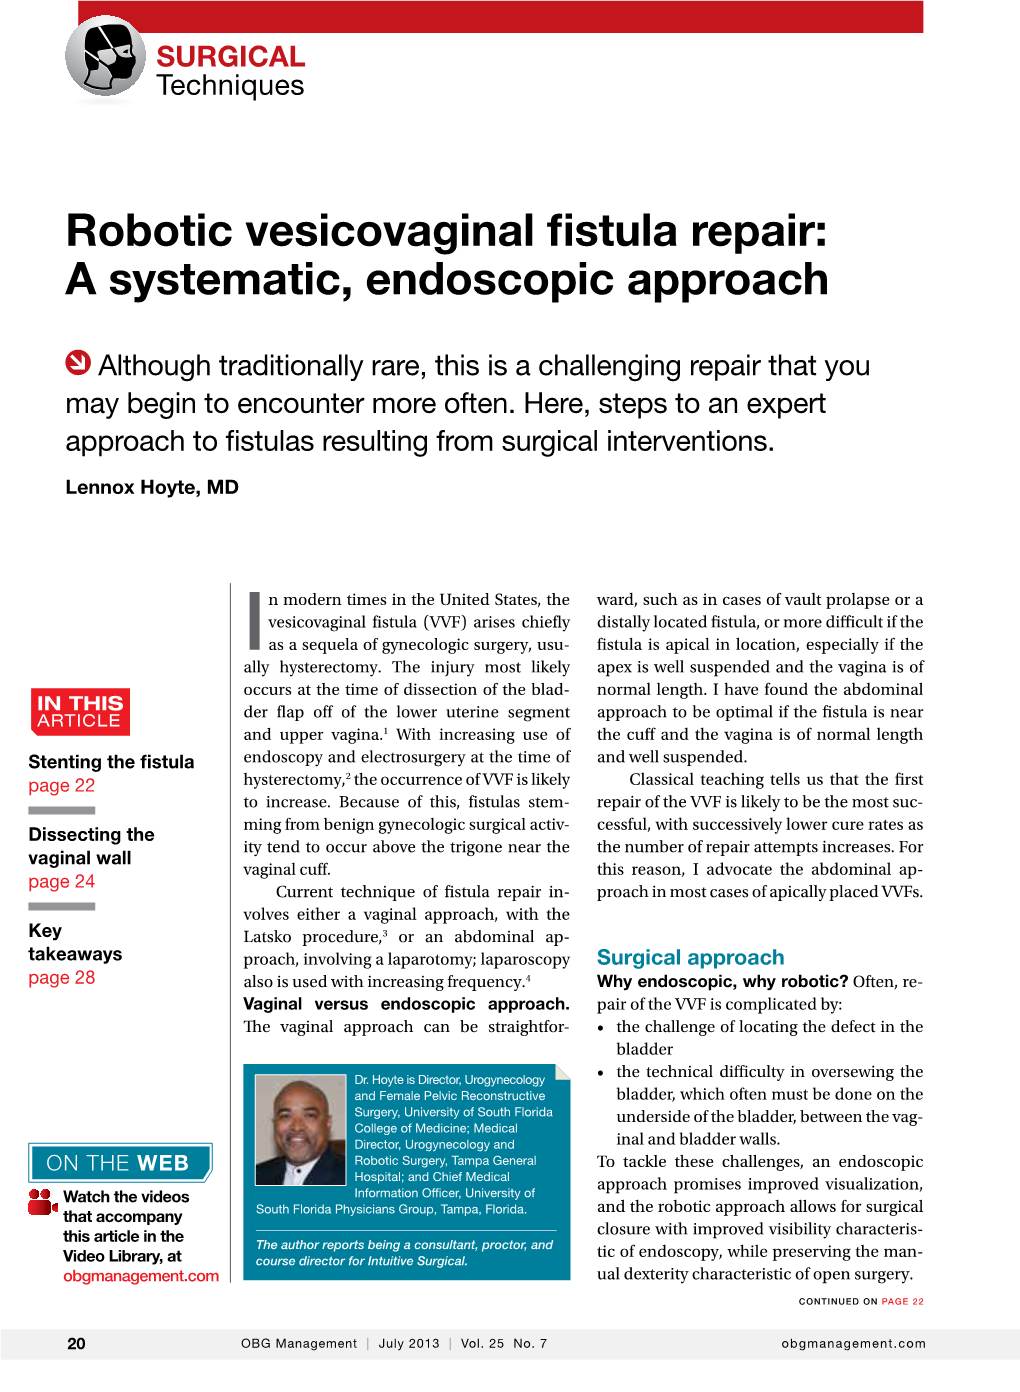 Robotic Vesicovaginal Fistula Repair: a Systematic, Endoscopic Approach